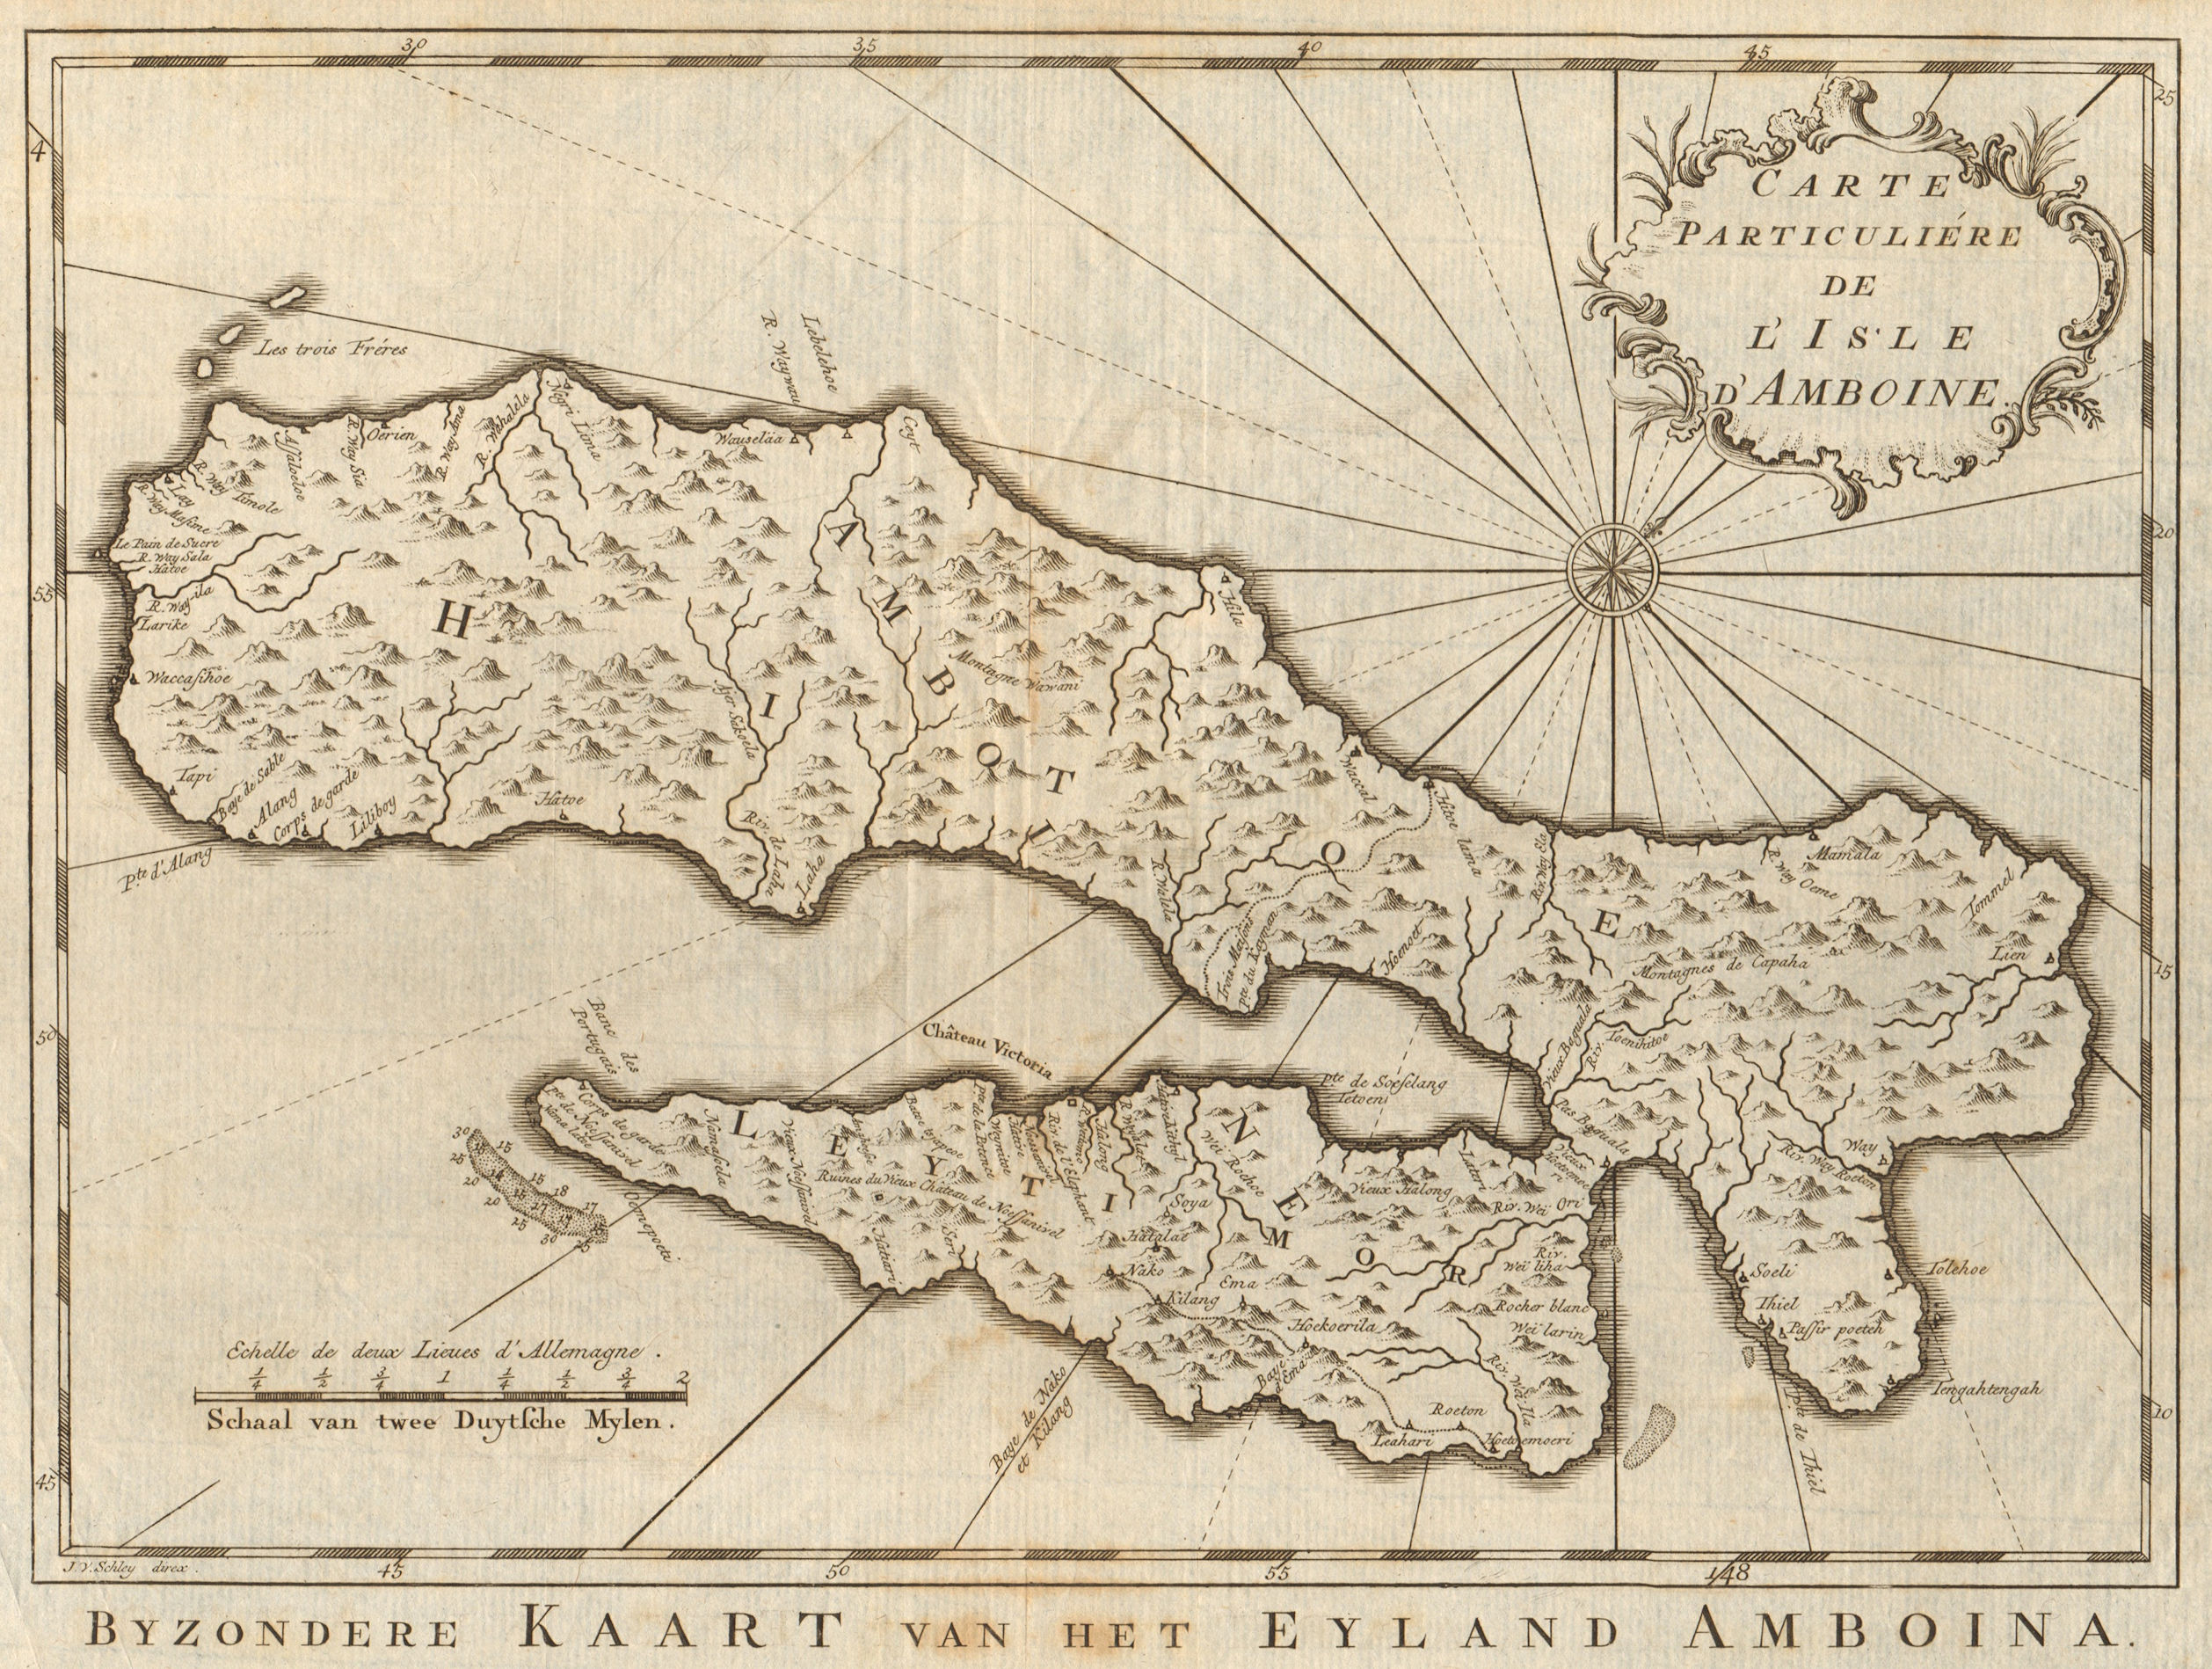 'Carte particulière de I’lsle d’Amboine'. Ambon, Maluku. BELLIN/SCHLEY 1755 map